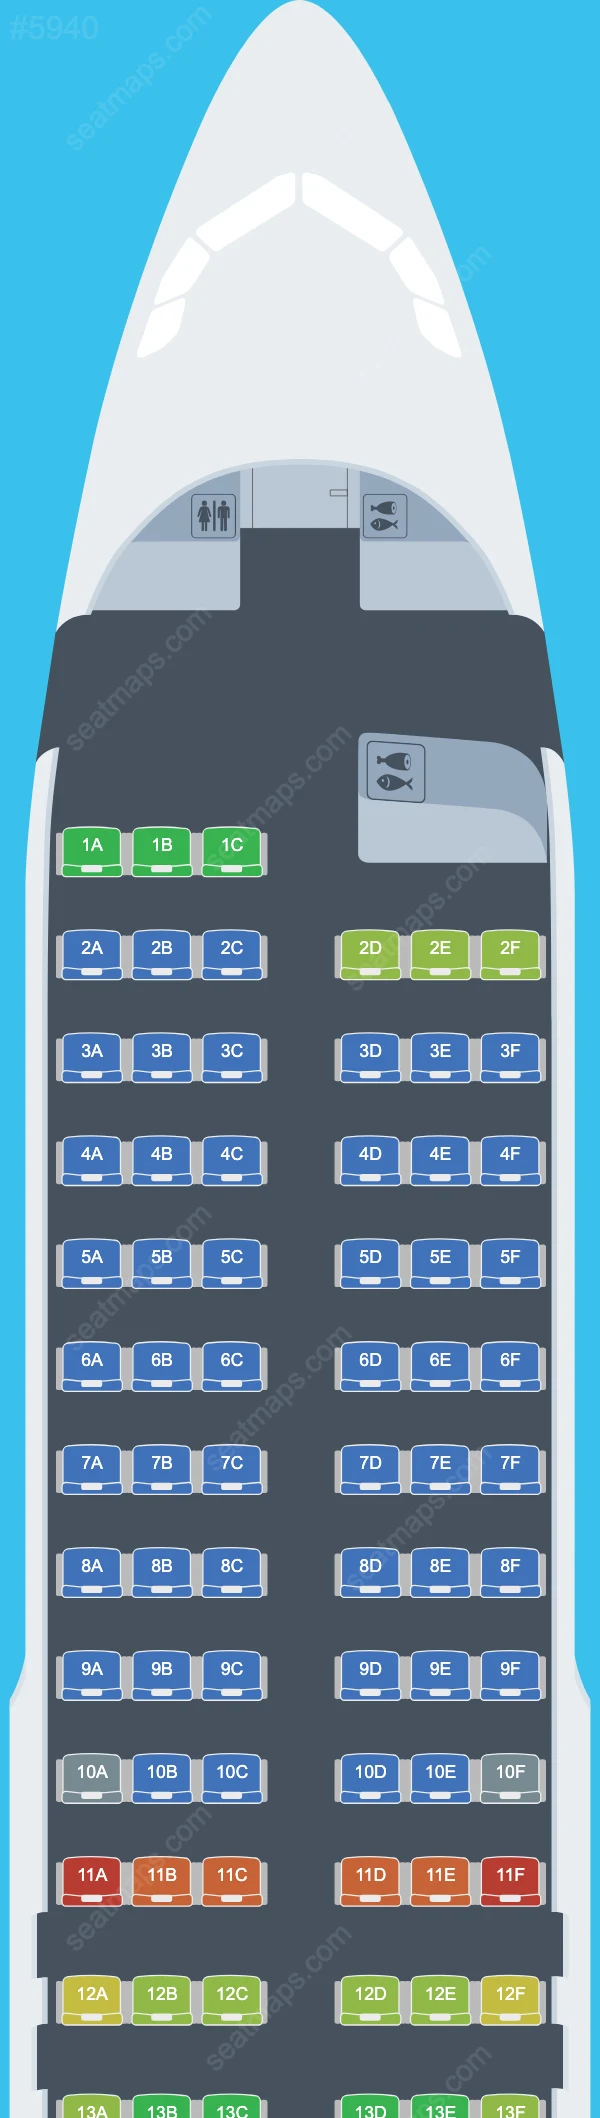 British Airways Airbus A320 Seat Maps A320-200 V.2